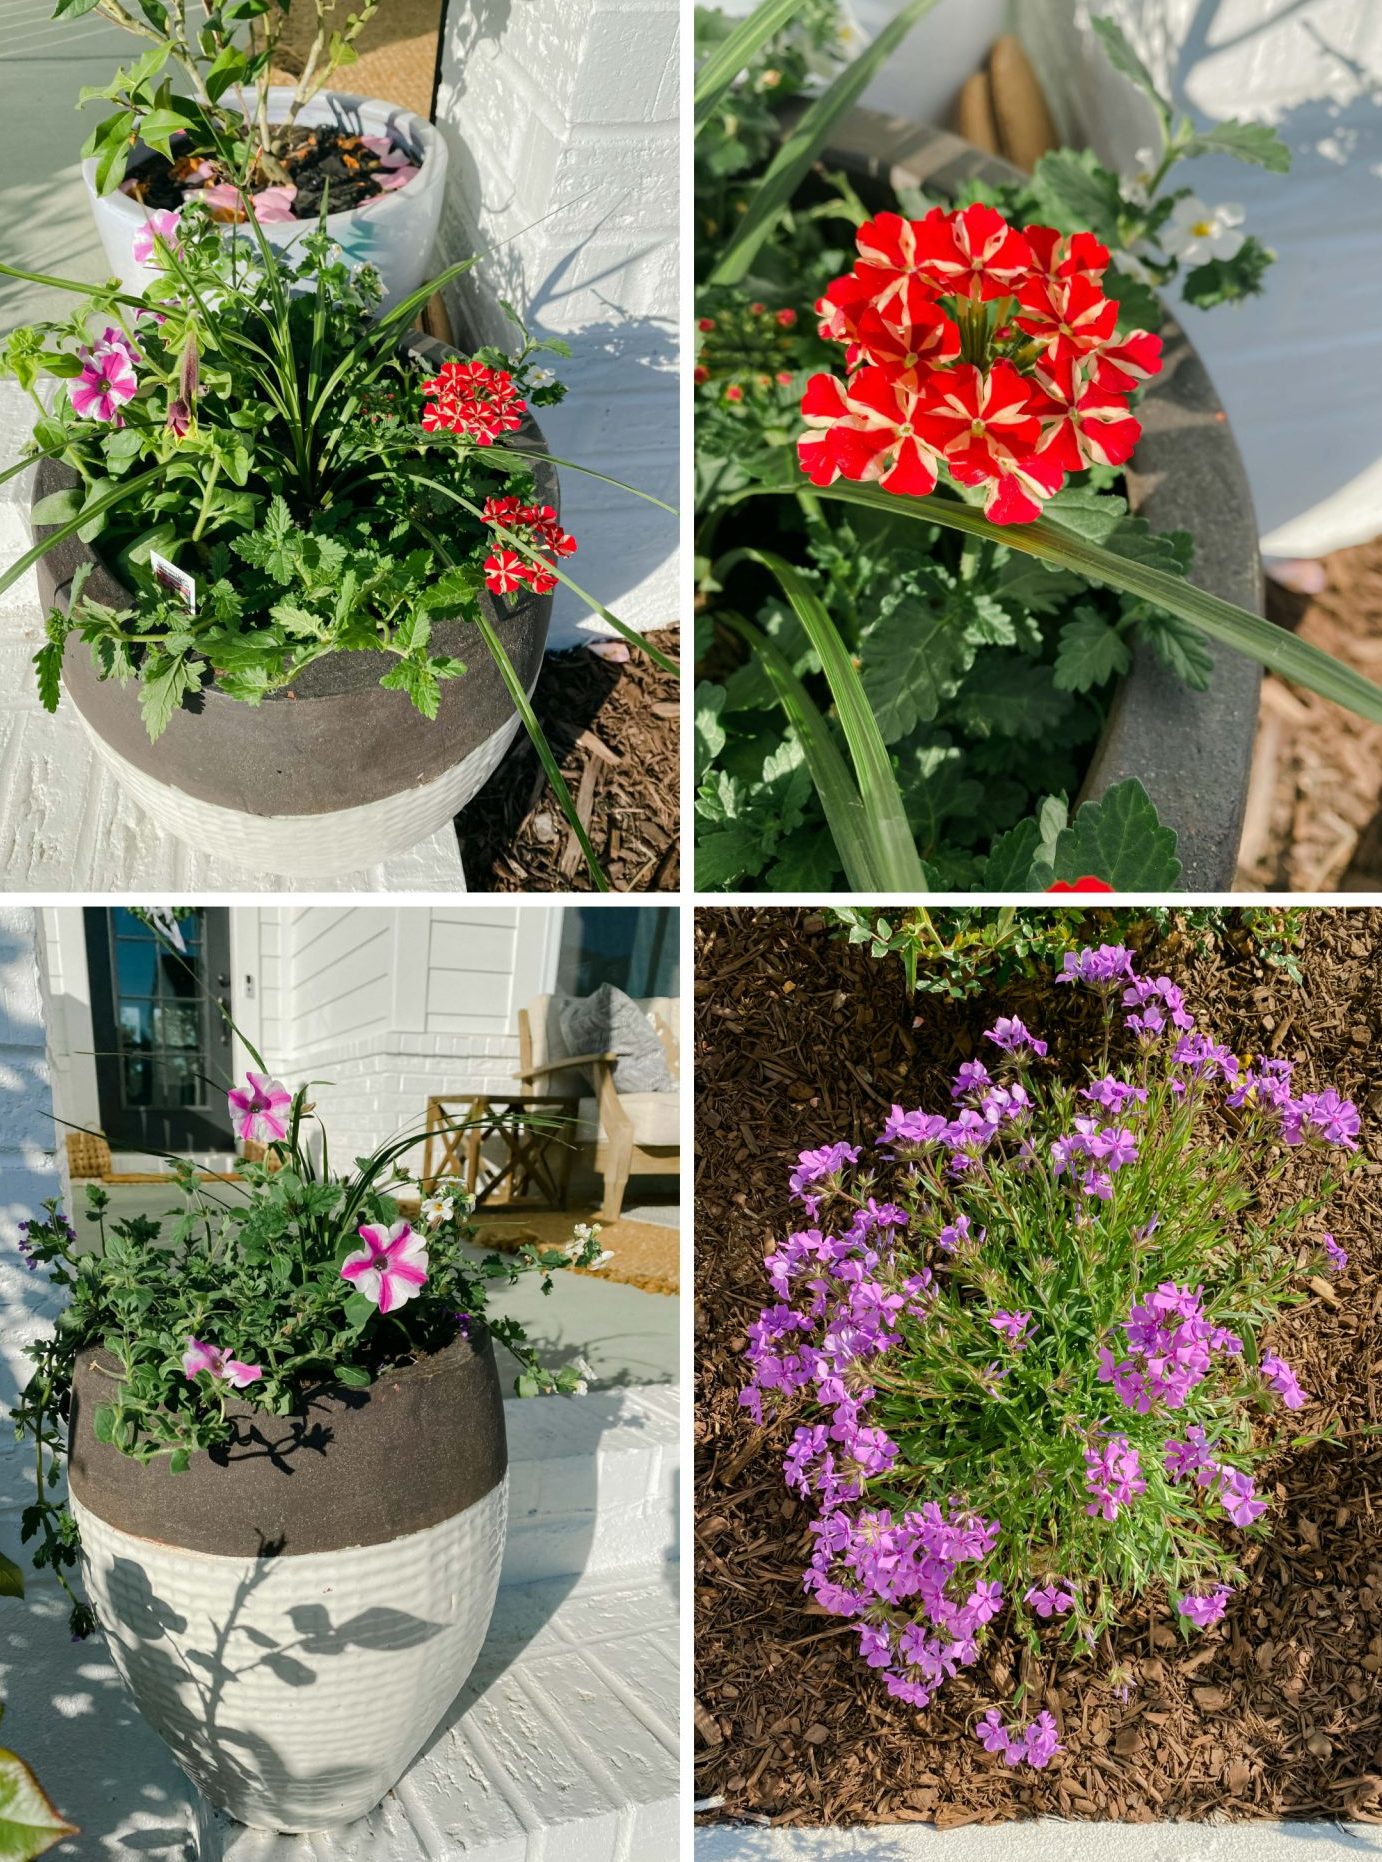 Wilsons rock hill nursery, rock hill, South Carolina, flowers, garden center, potting, pots, flowers, front porch